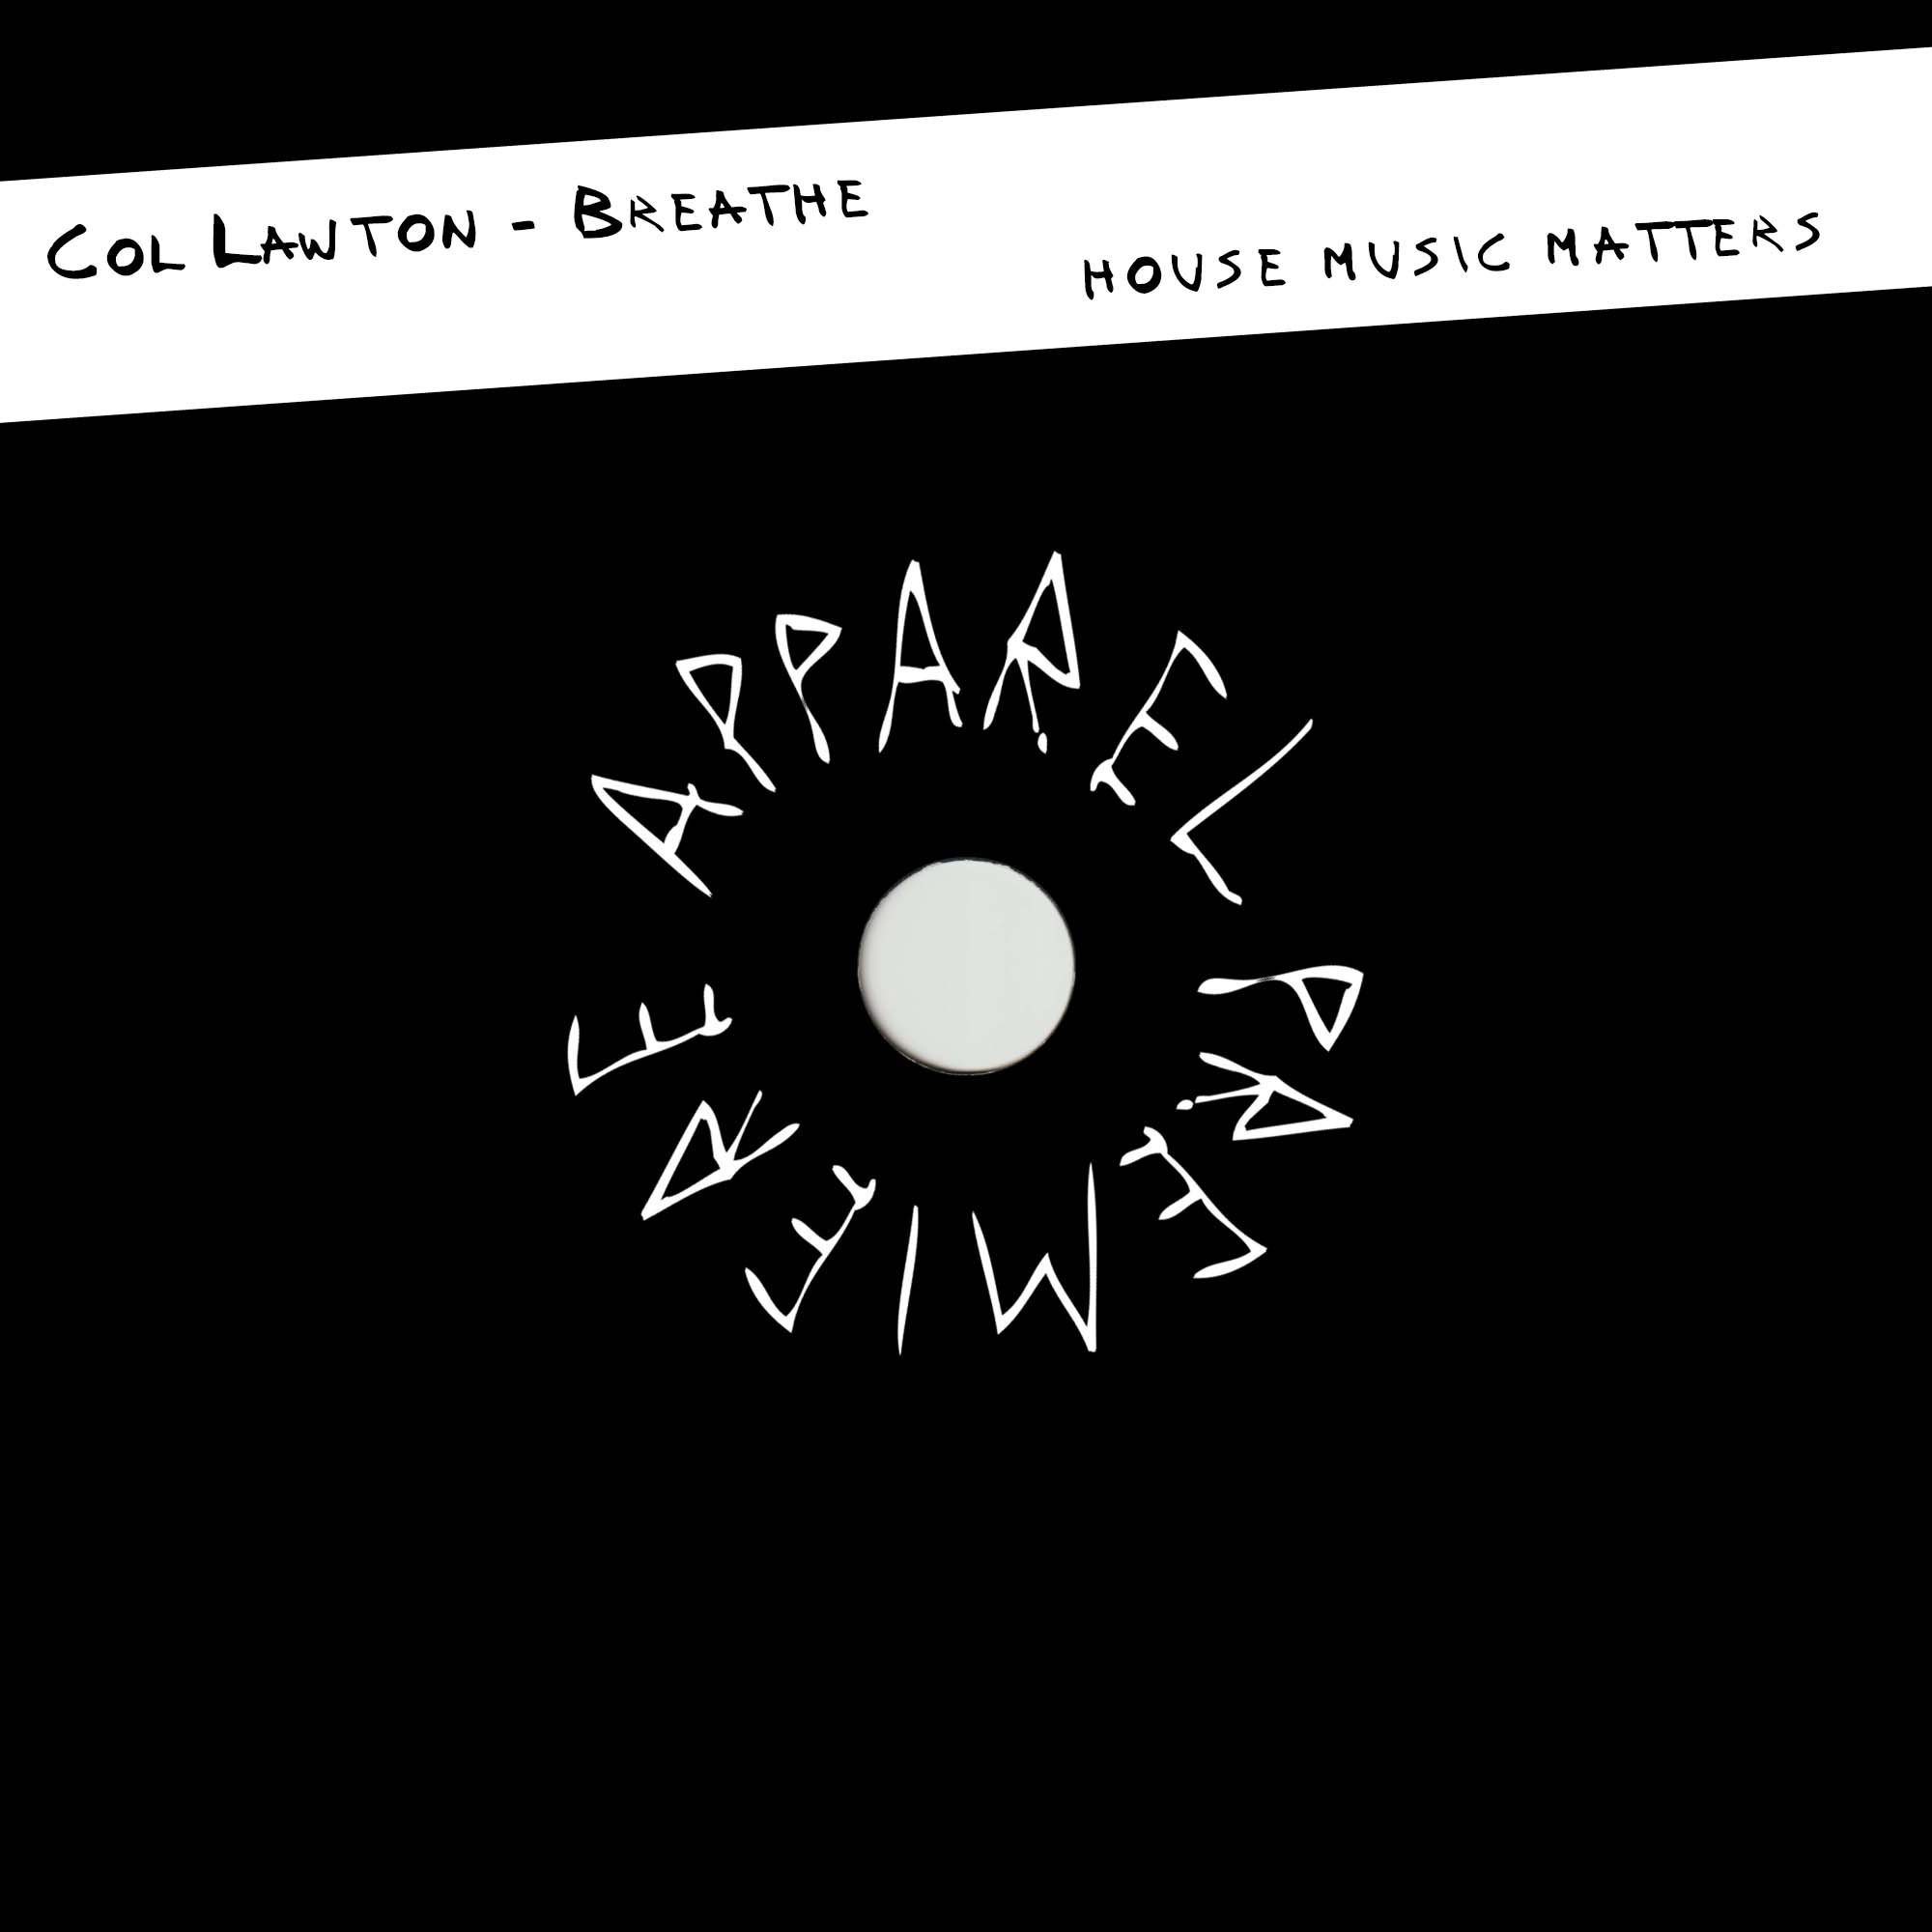 APPAREL PREMIERE Col Lawton – Breathe (House Music Matters)